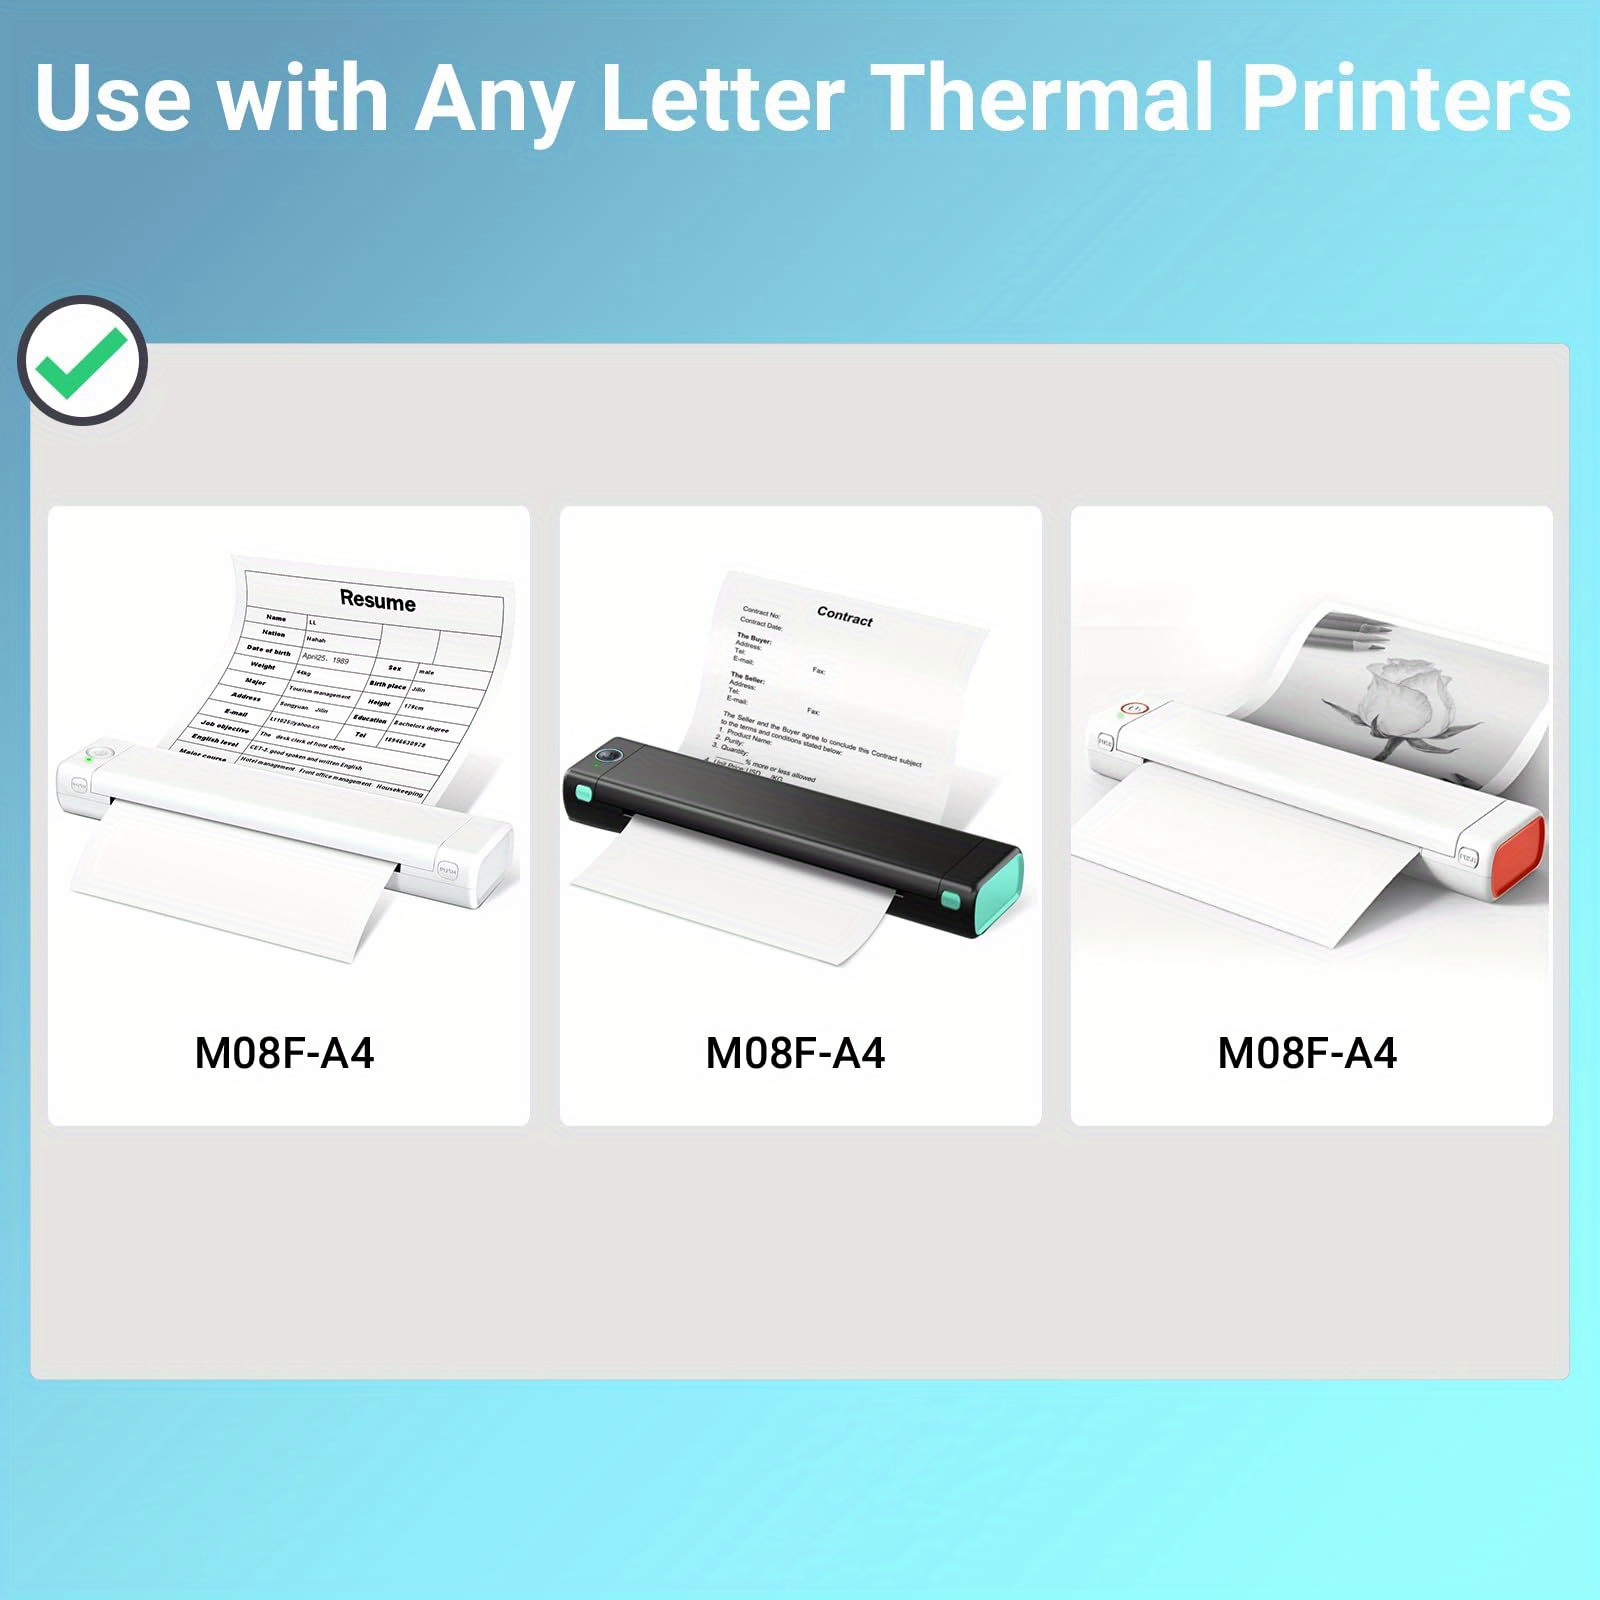  Printer Paper 8.5 x 11 White, Itari Copy Paper for Printer  Phomemo P831 HPRT MT800 Thermal Transfer Printer, Multipurpose Copy Paper  for Laser Printer, Inkjet Printer, 200 Sheets US Letter